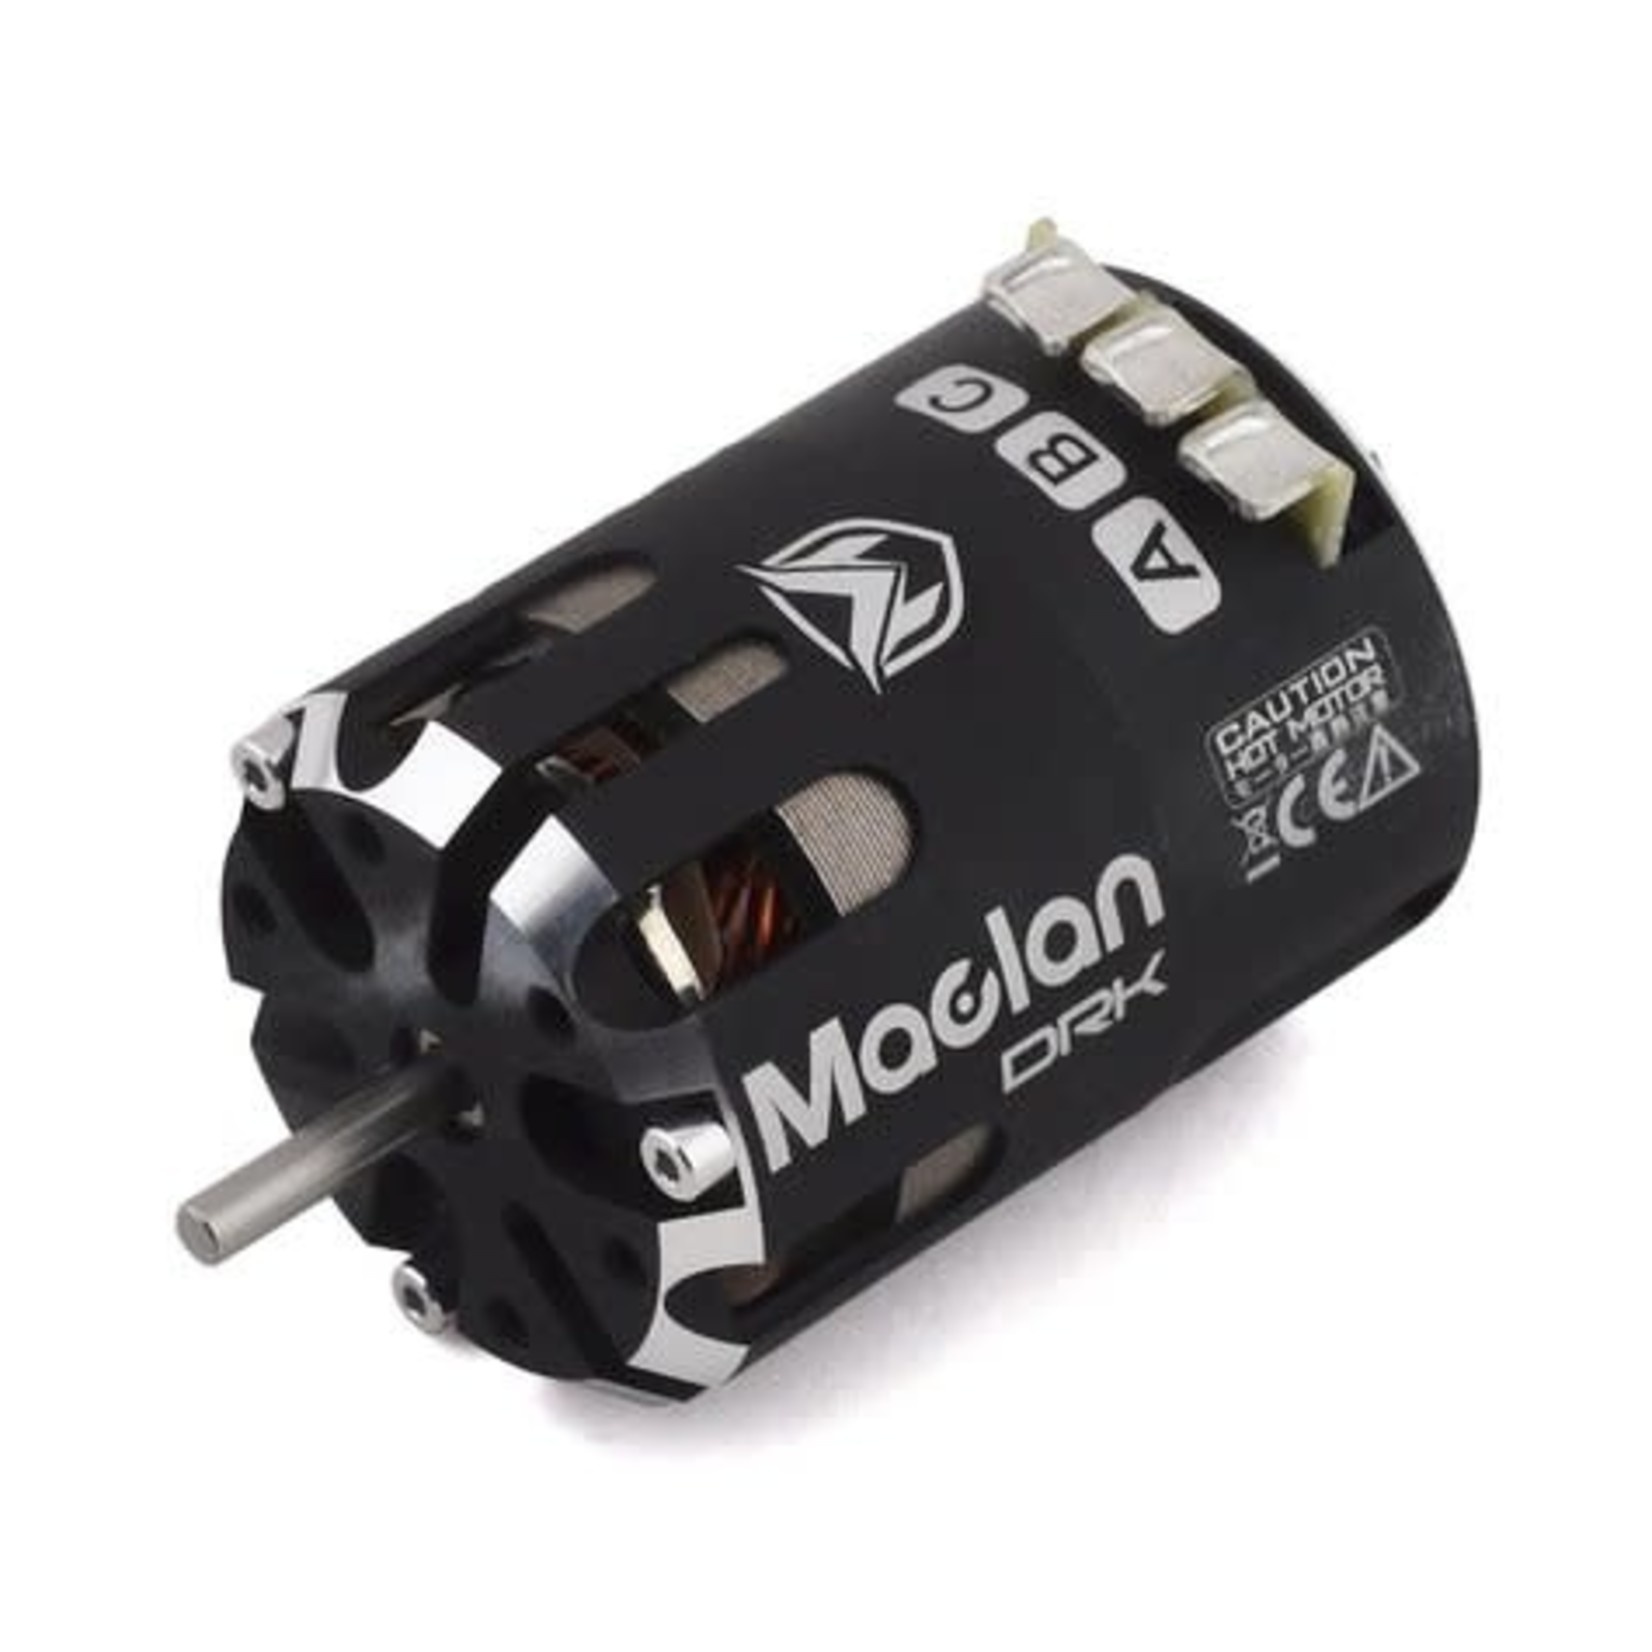 Maclan Maclan DRK Drag Race King Drag Racing Modified Brushless Motor (3.5T) #MCL1069